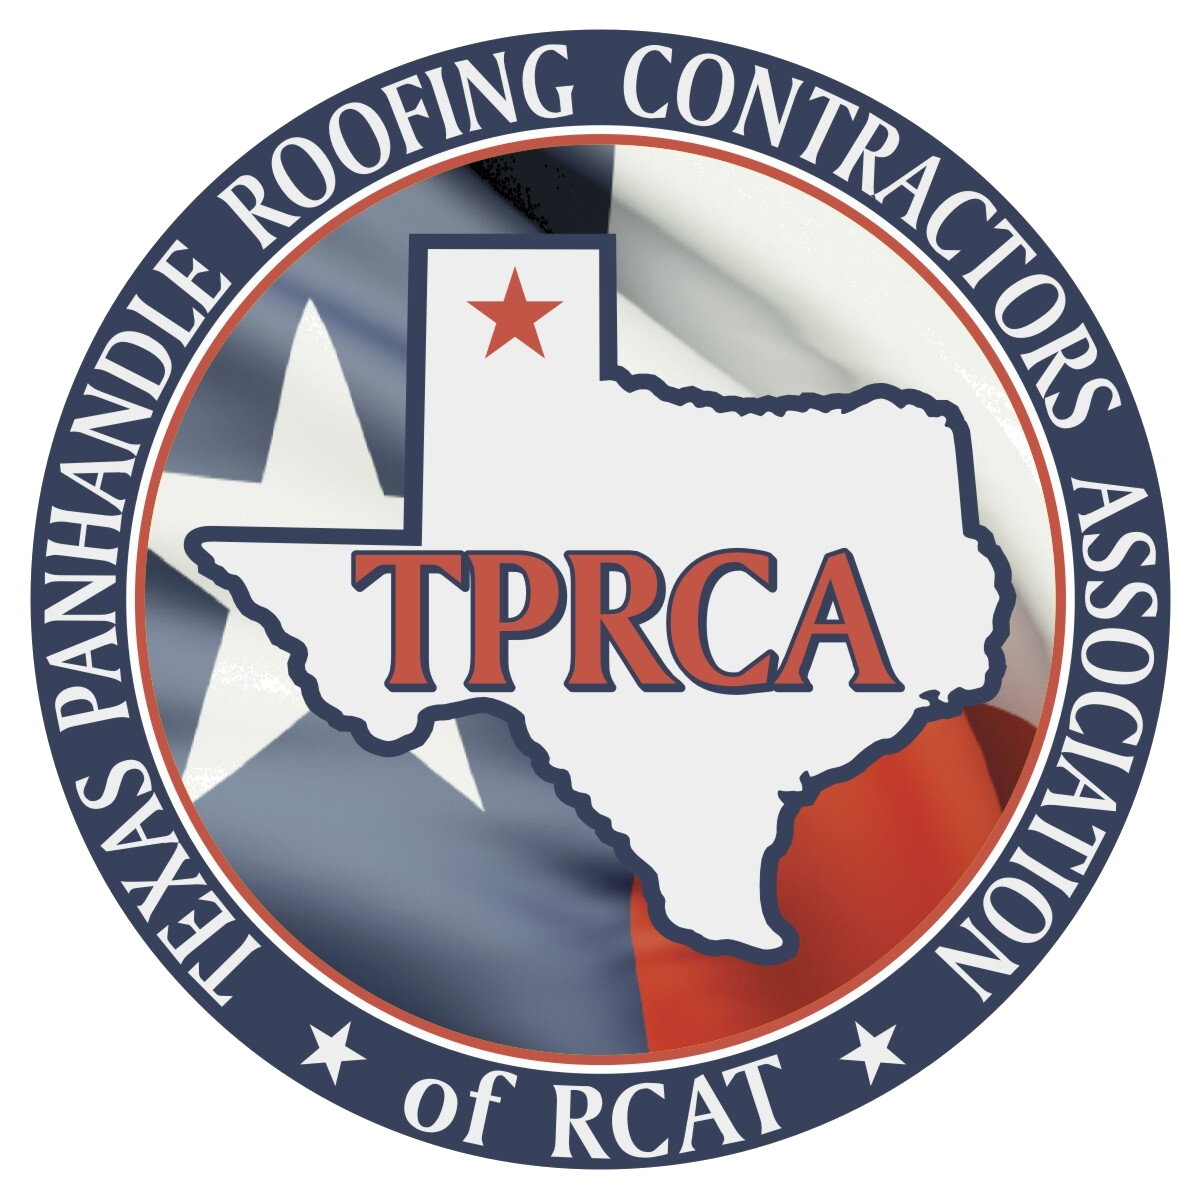 Texas Panhandle Roofing Contractors Association